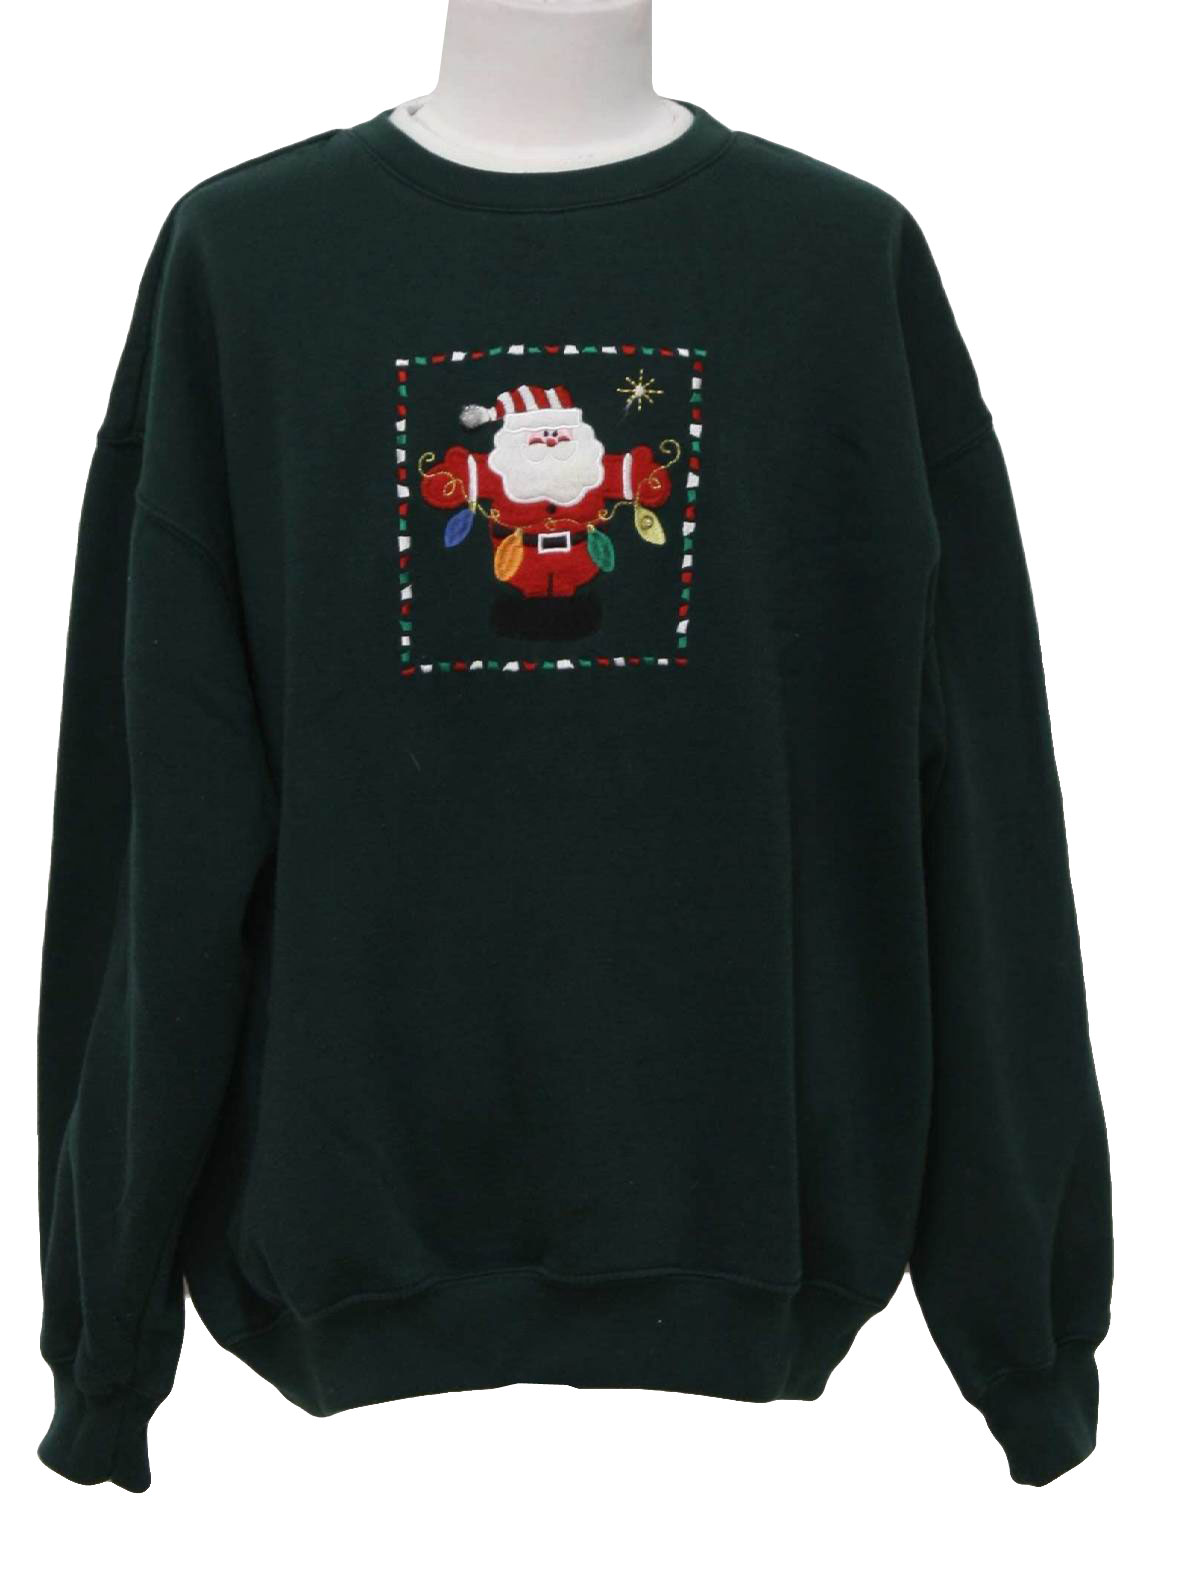 1980 S Ugly Christmas Sweatshirt Classic Elements 80s Authentic